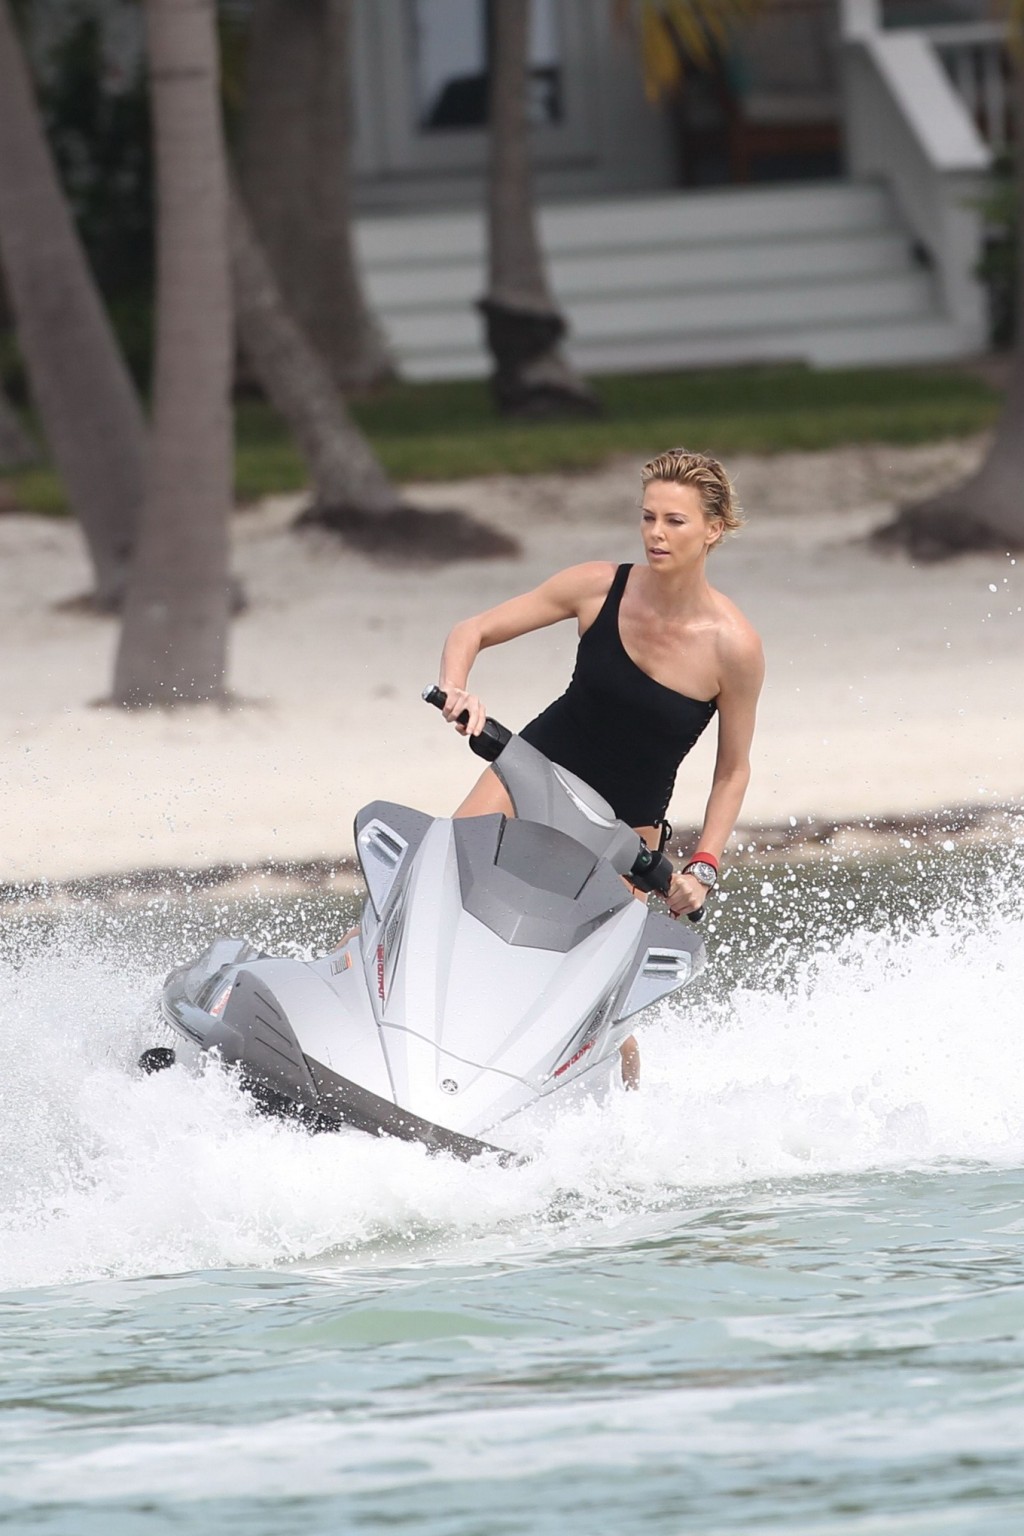 Charlize theron jet skiing in schwarzem monokini während des photoshoot in miami beac
 #75201252